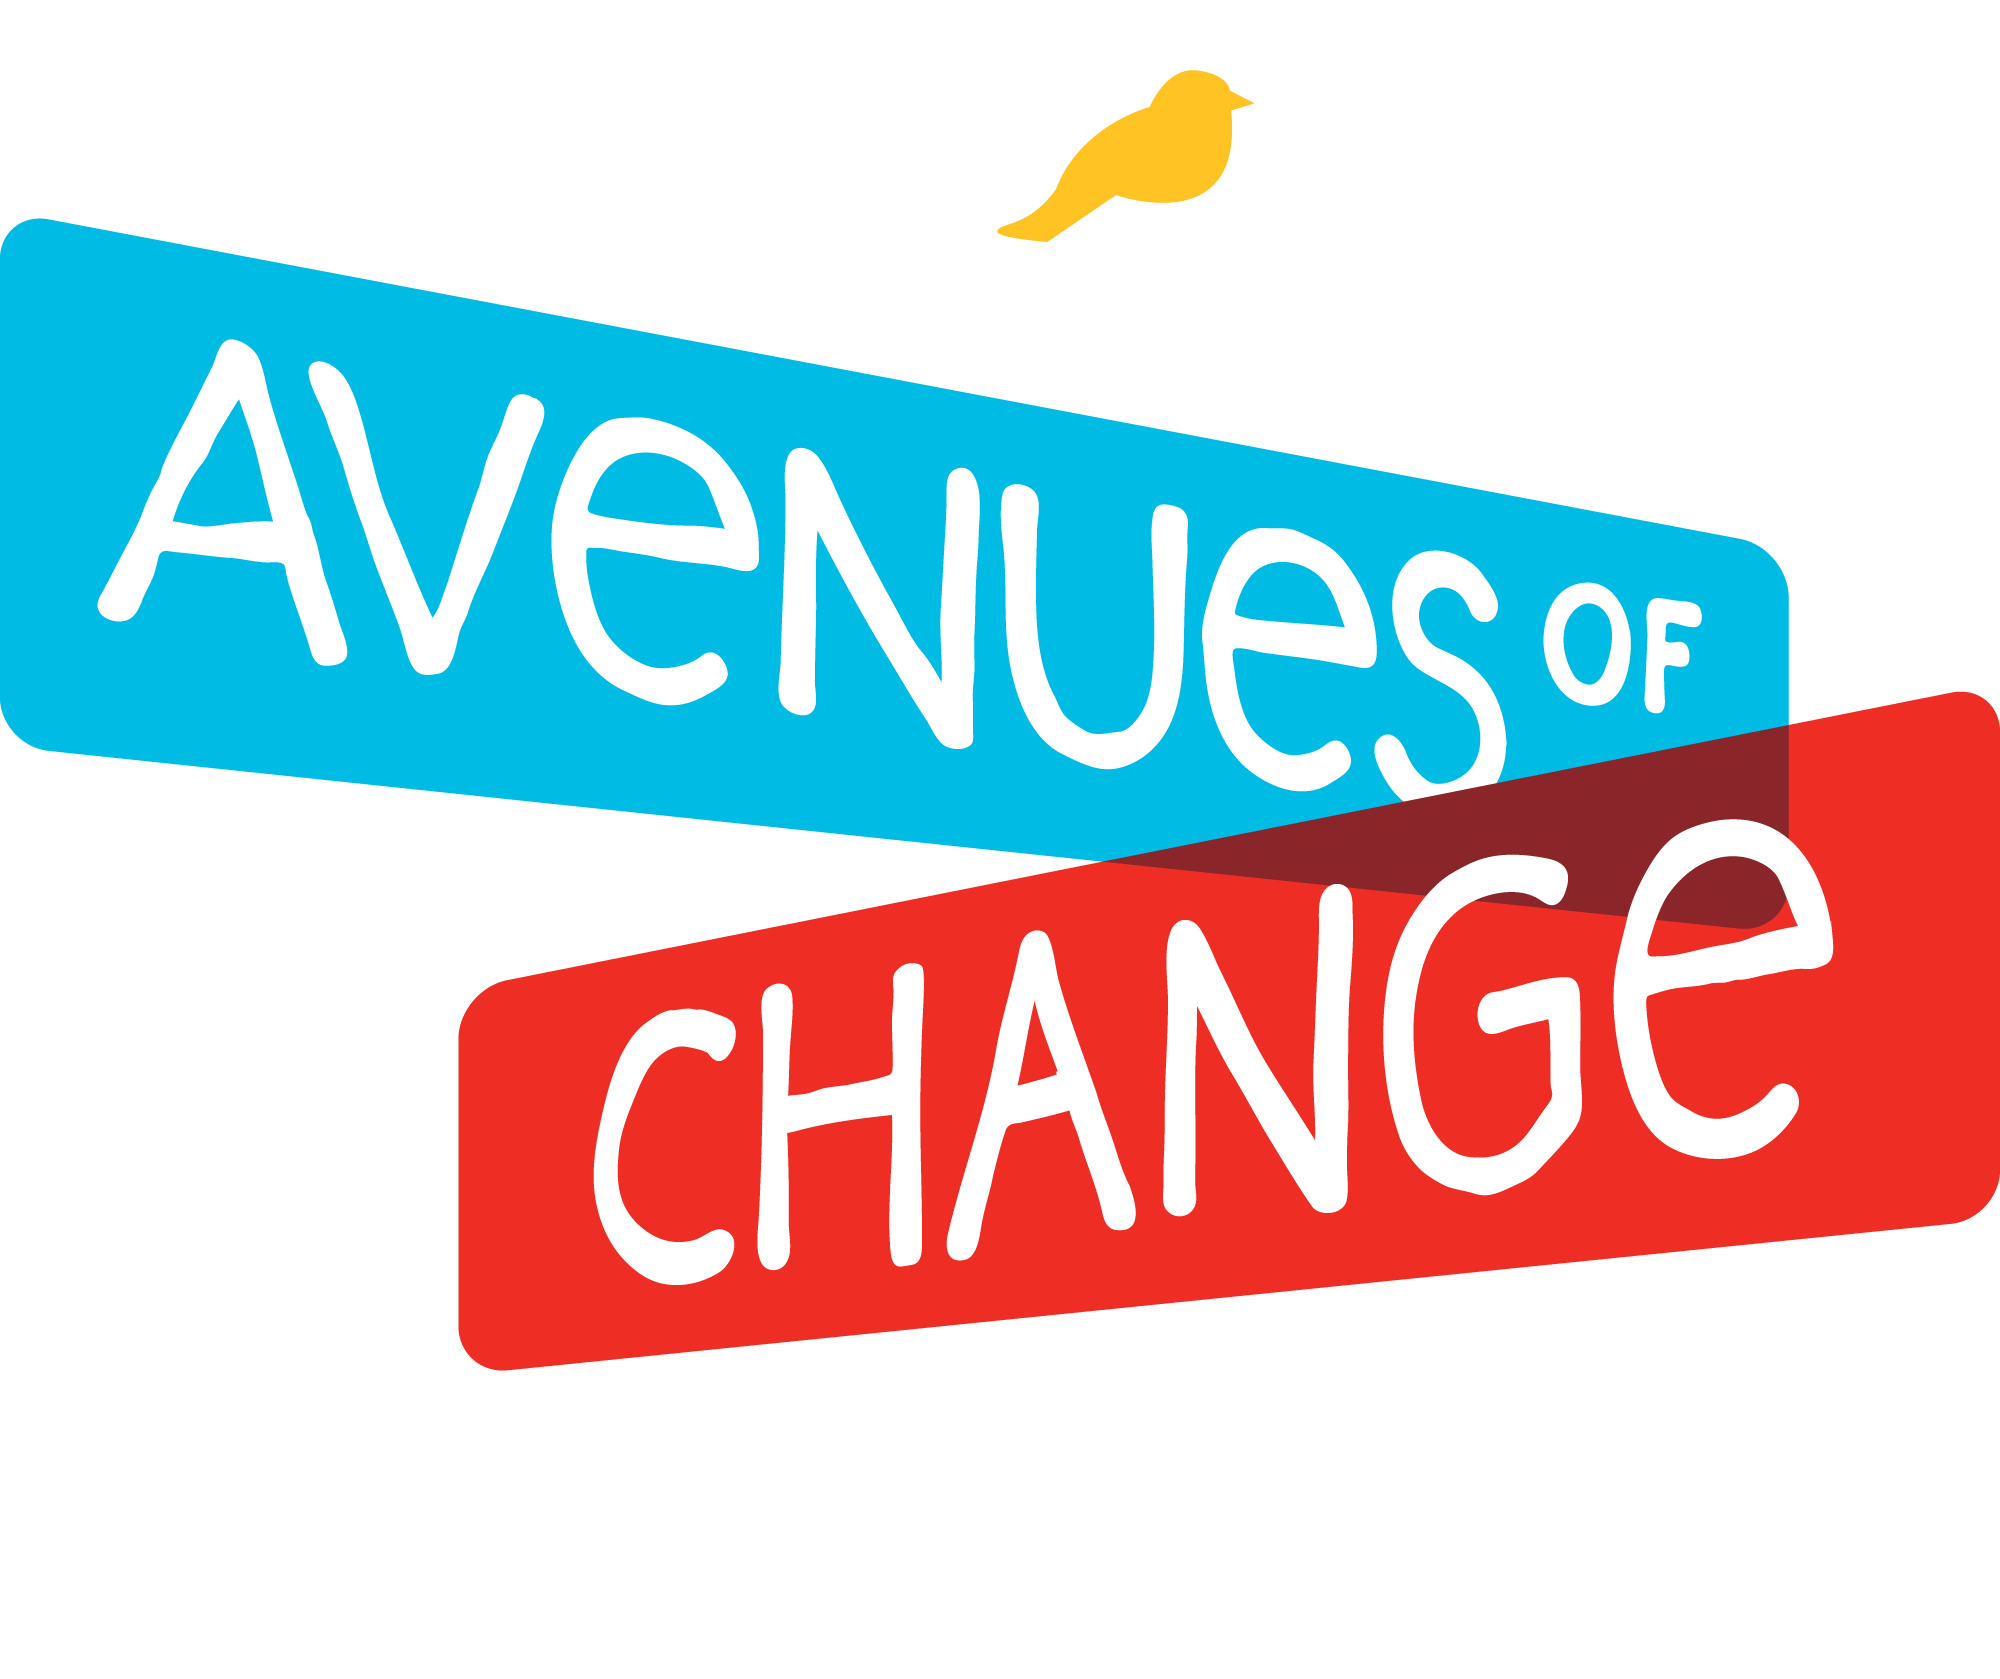 United Way-Avenues of Change